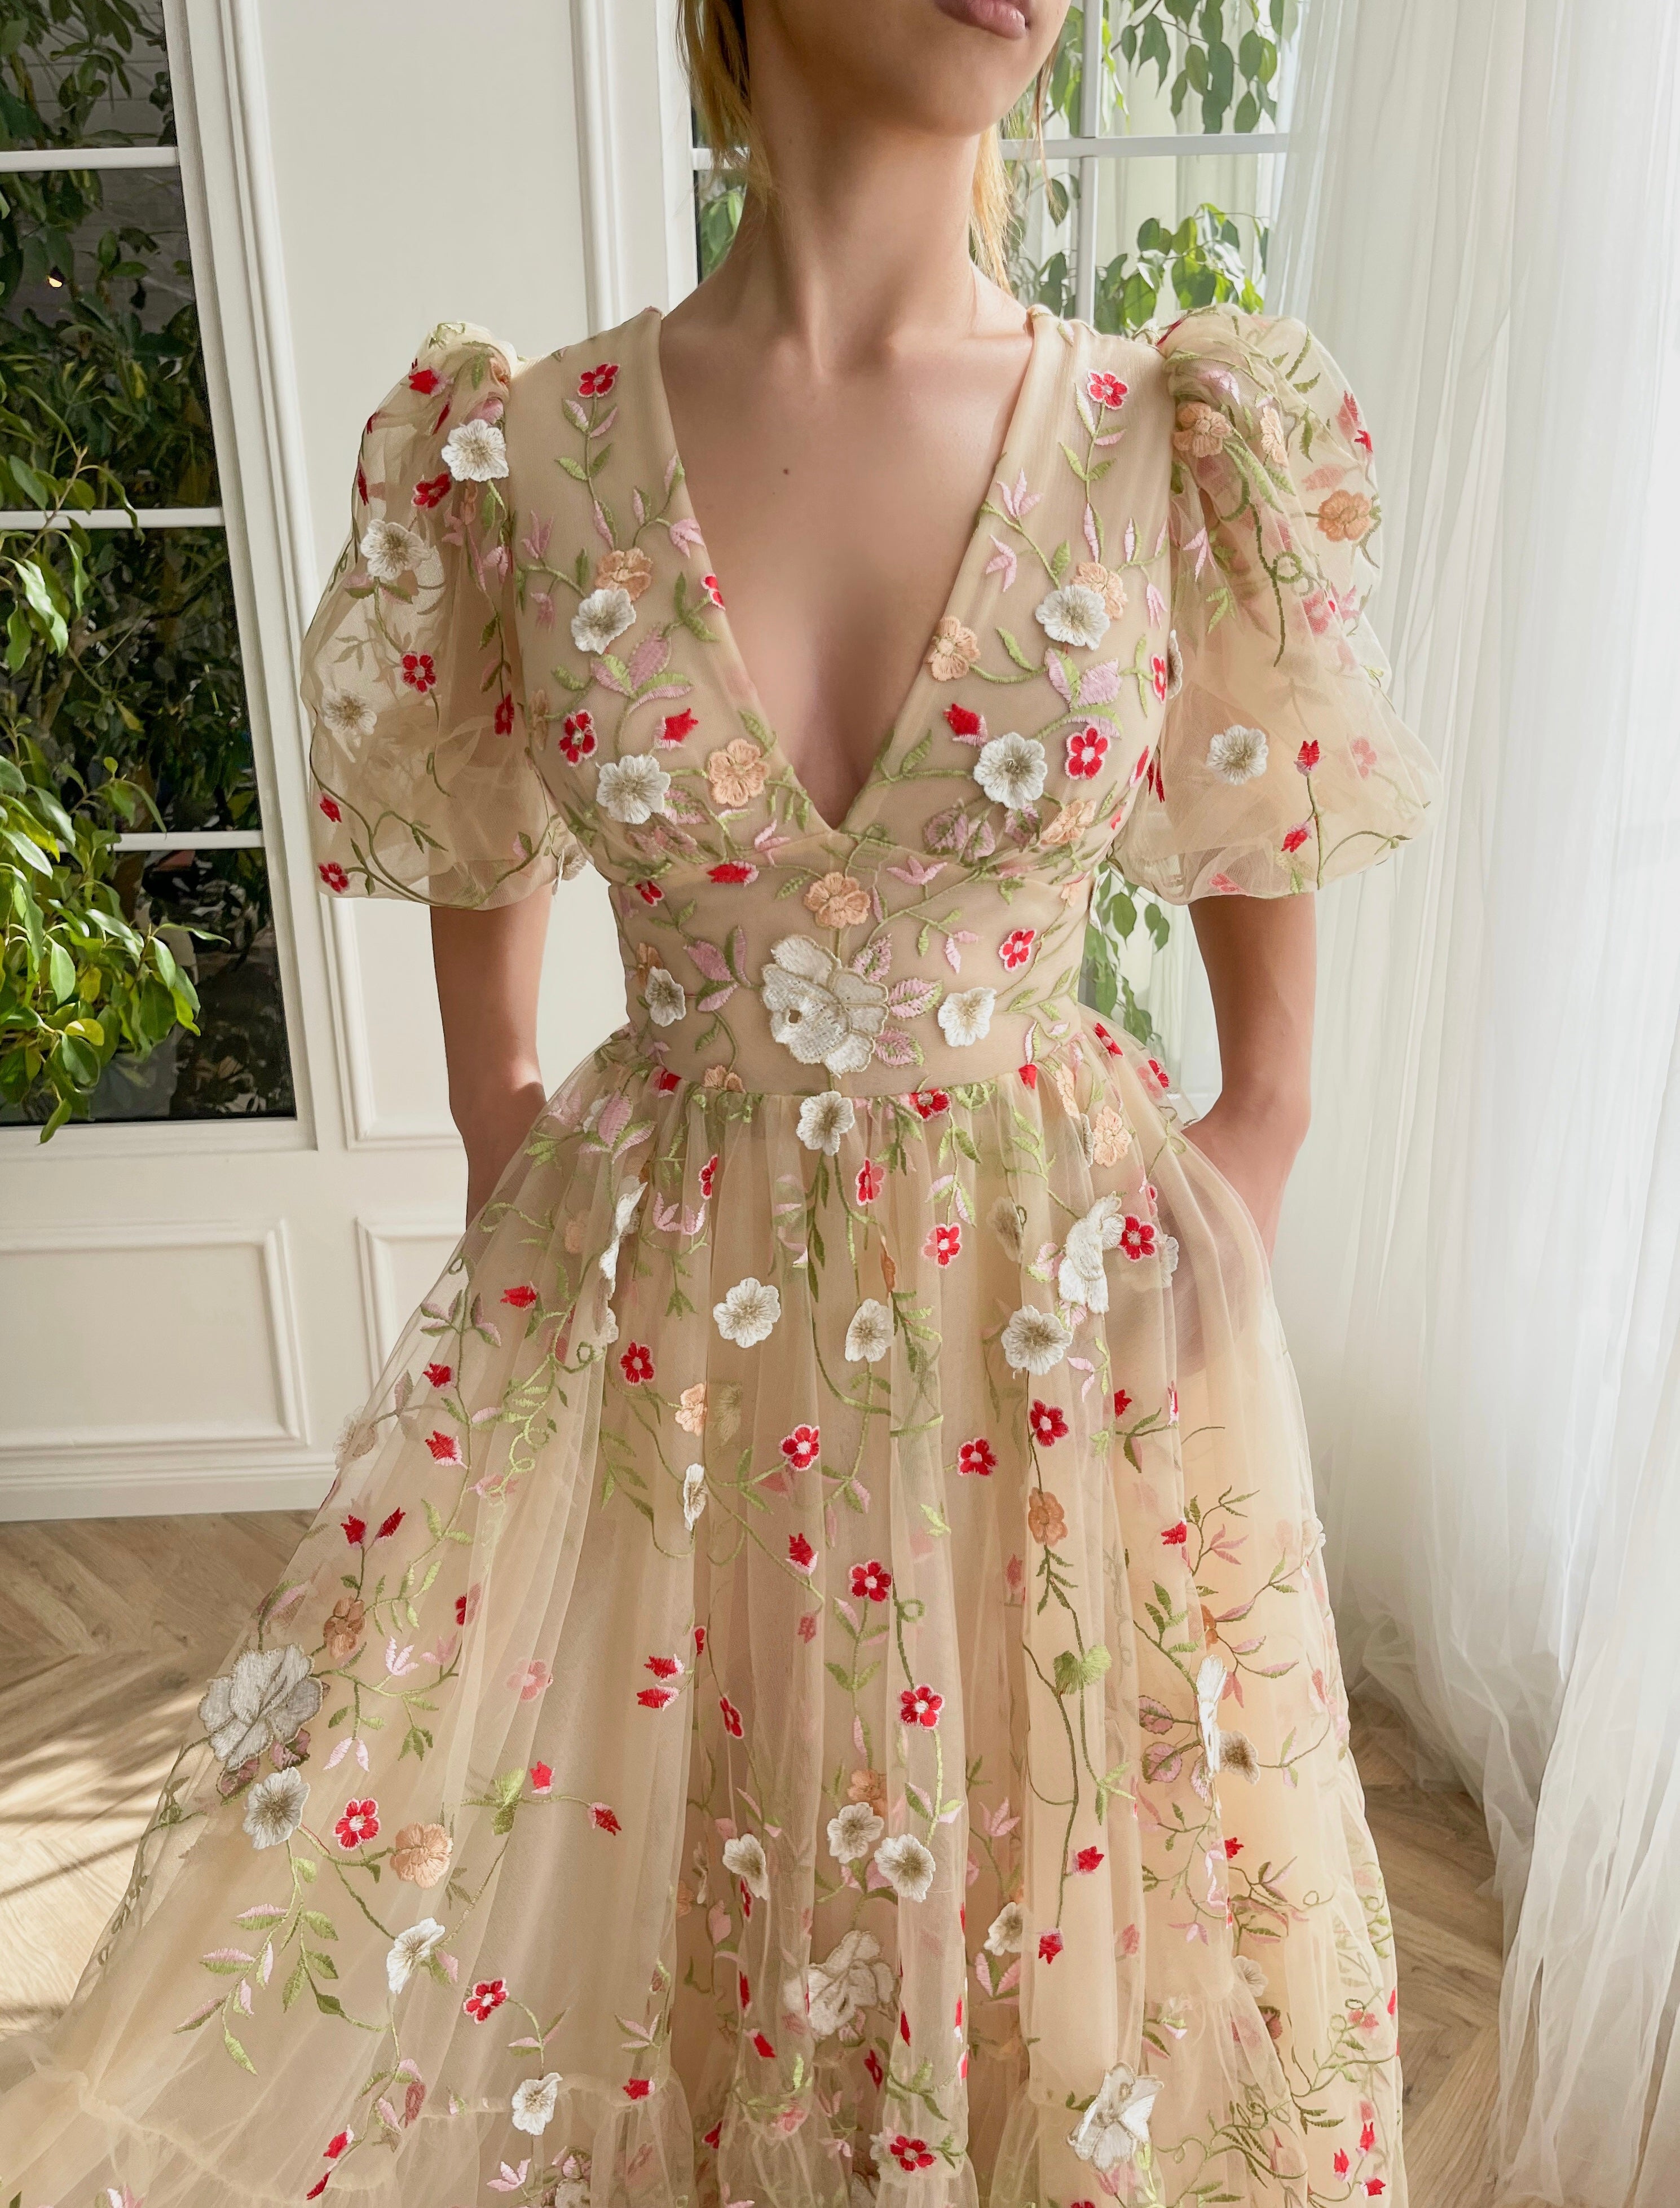 flowery dress